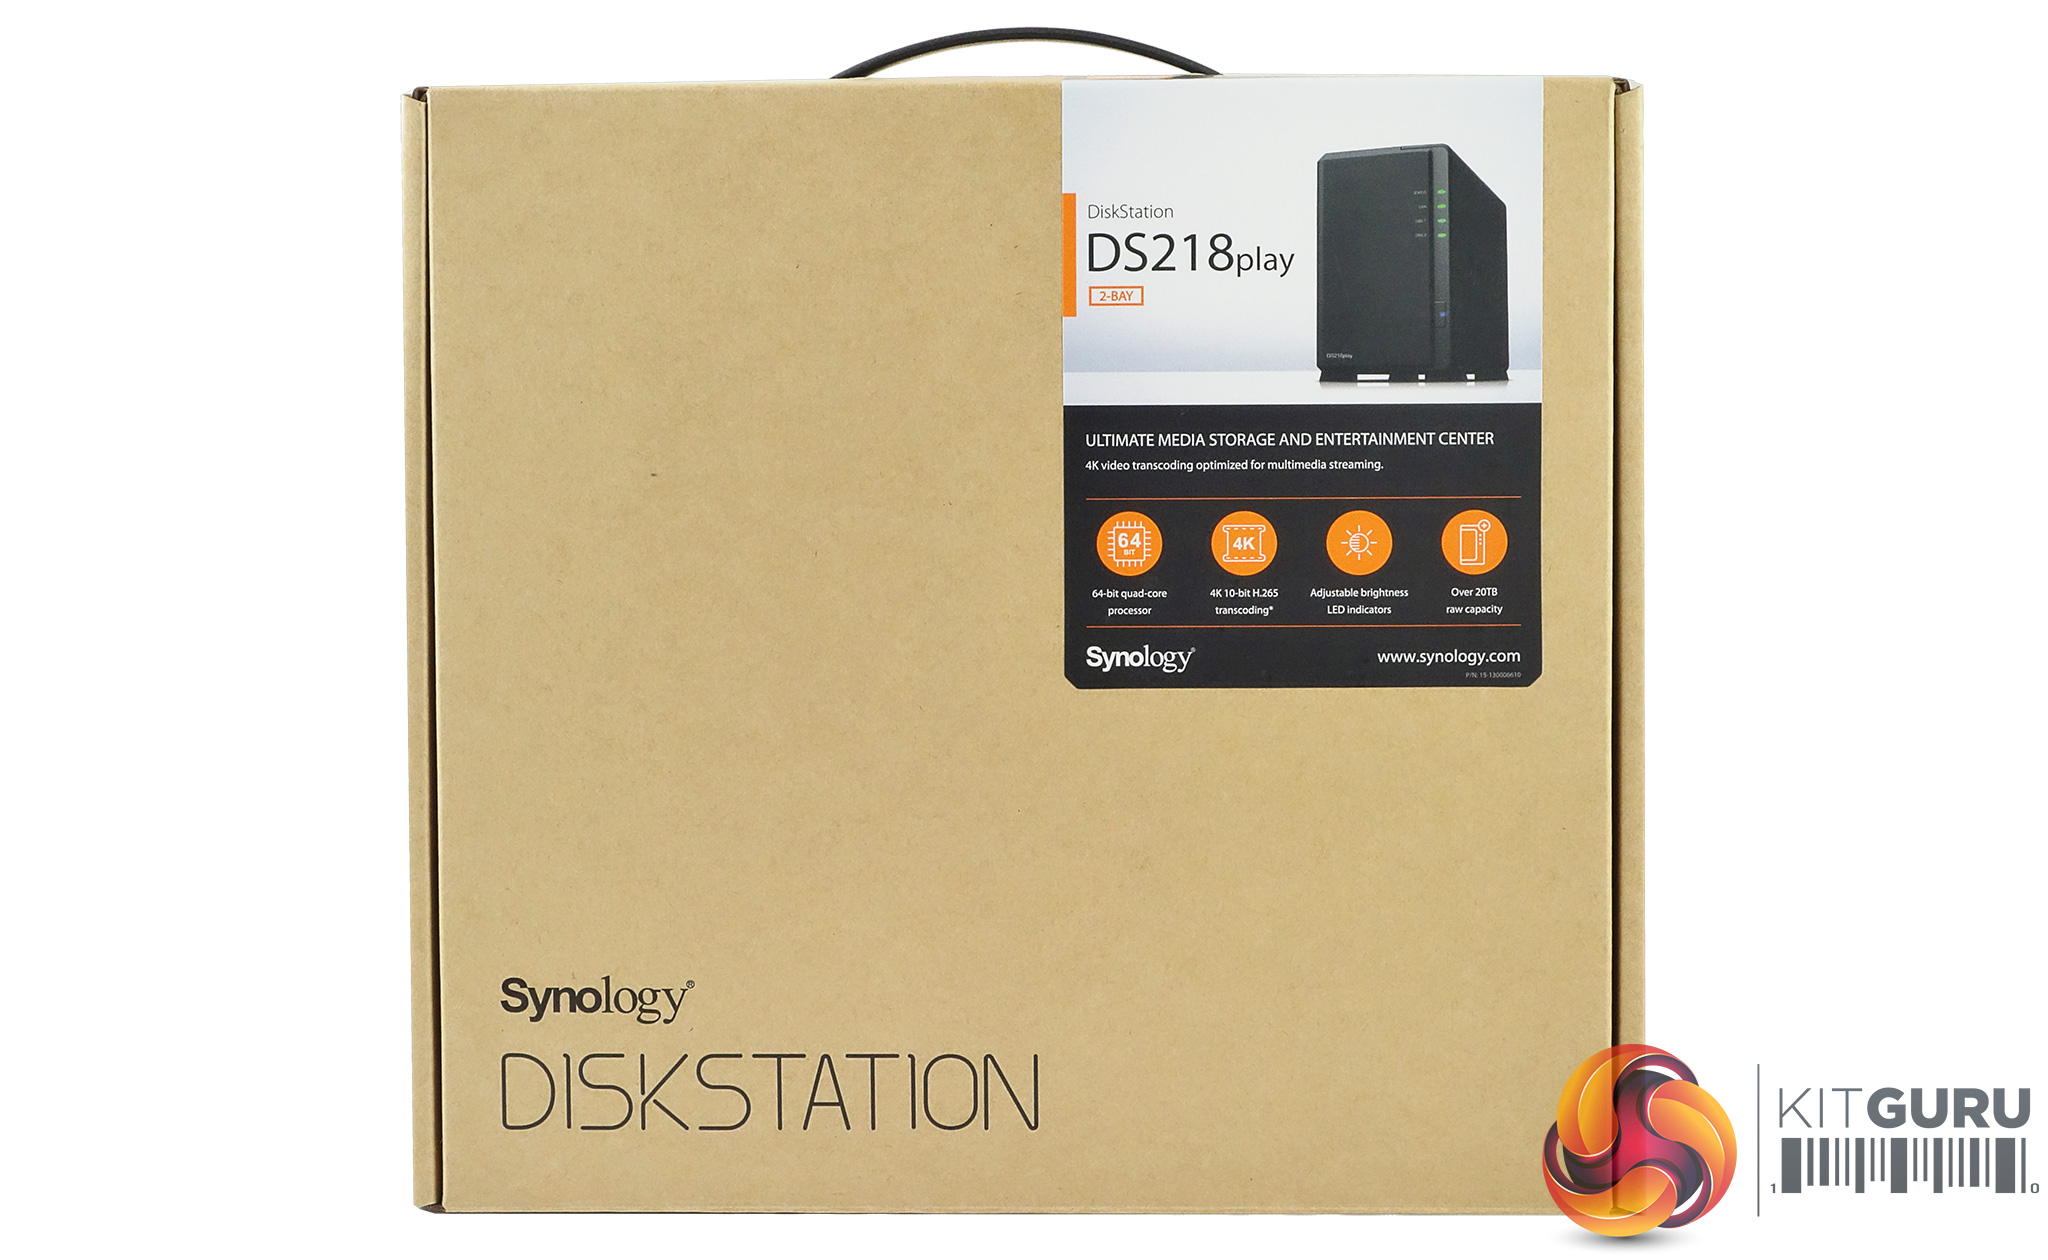 Synology DiskStation DS218play 2-bay NAS review | KitGuru